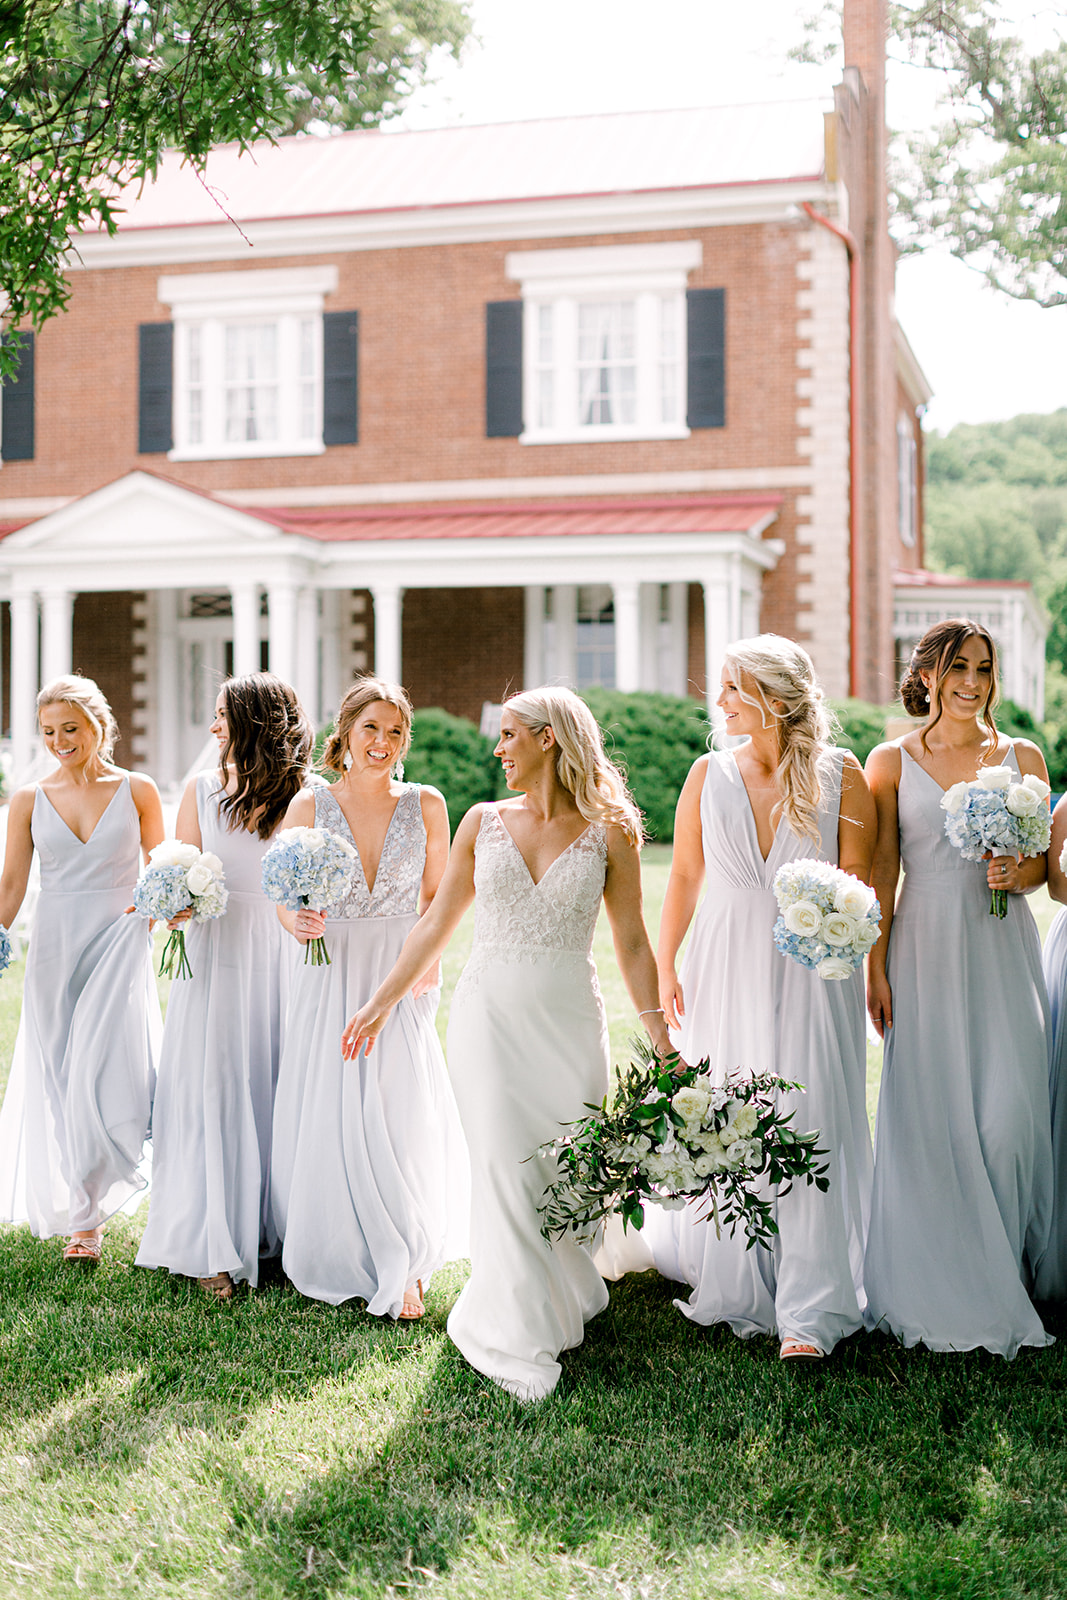 Light blue bridesmaid dresses